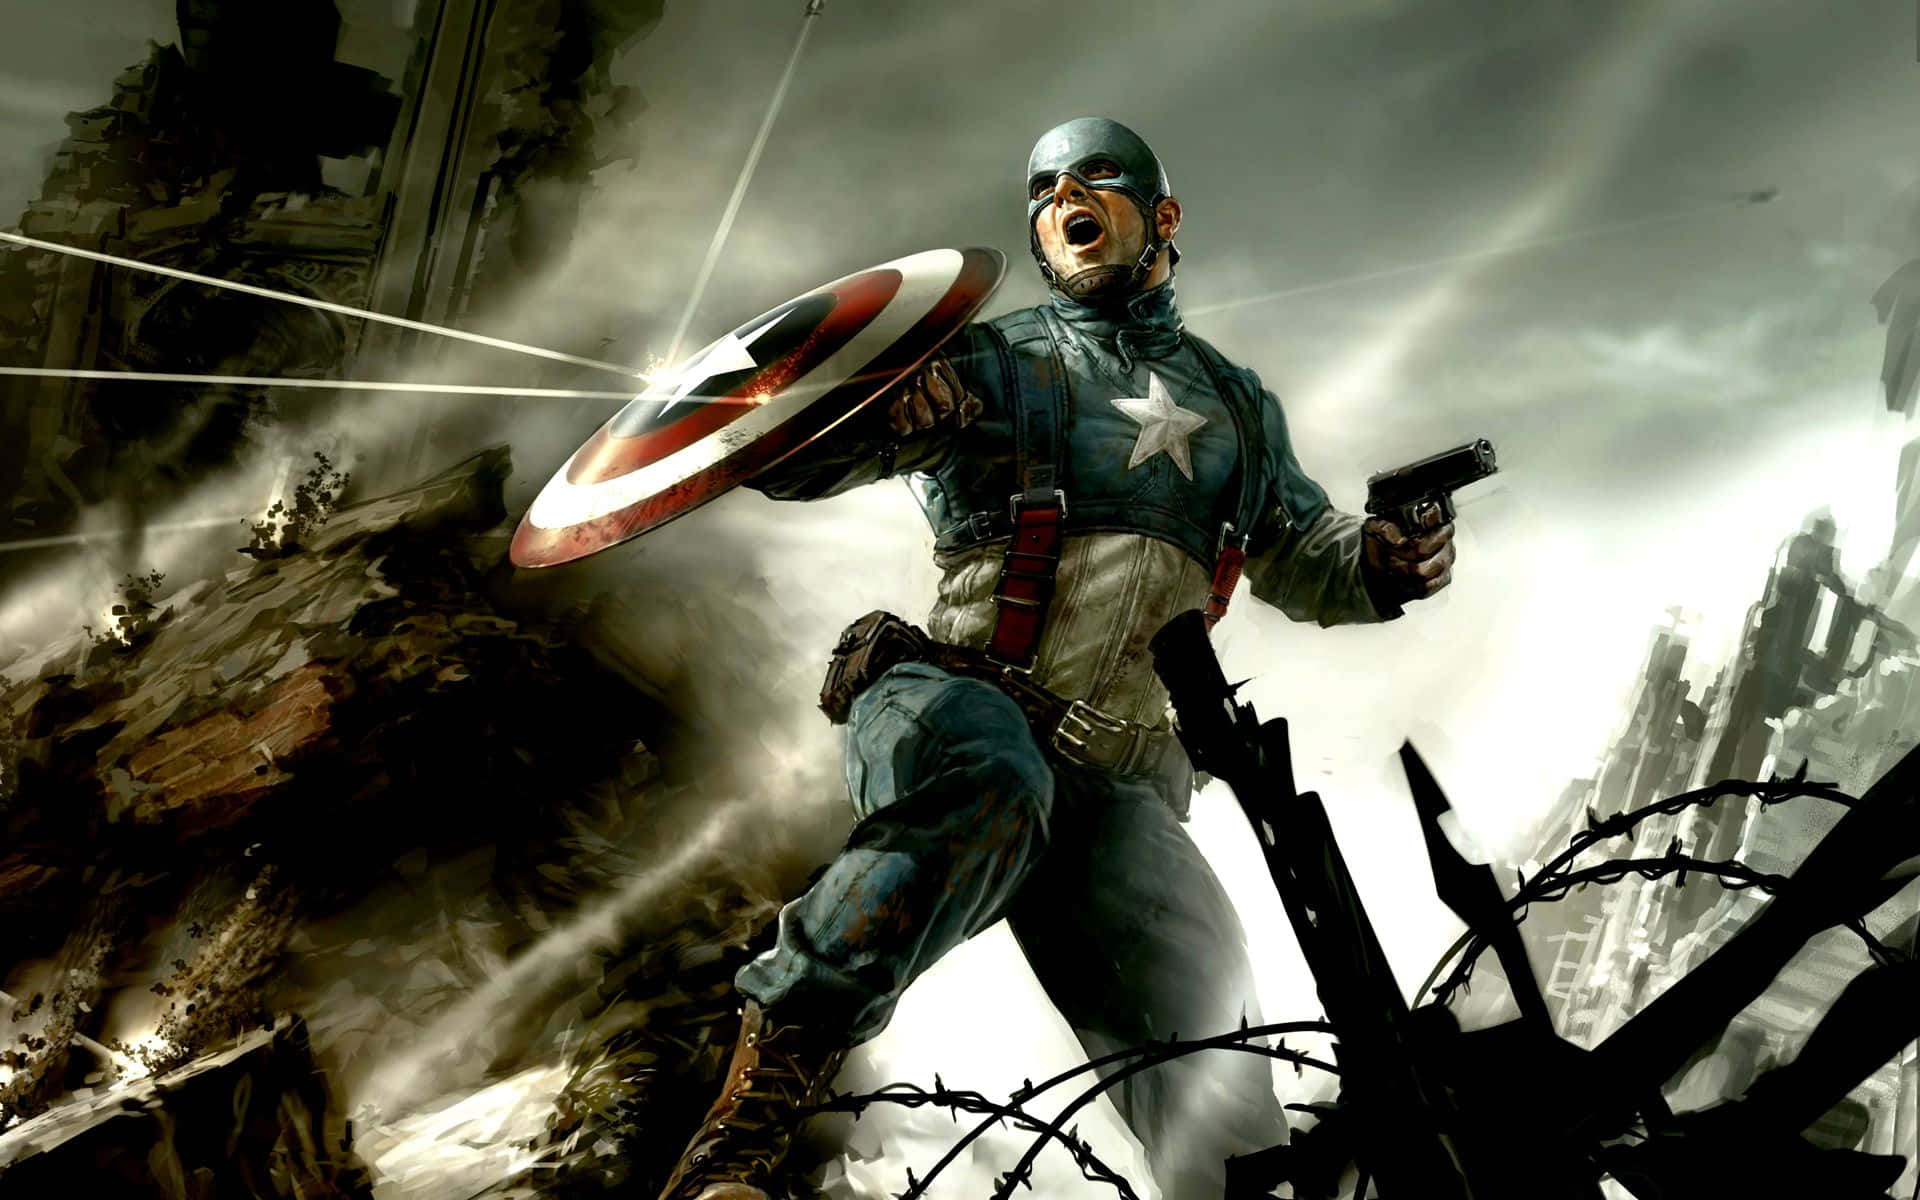 Captain America - The Best Hero of All